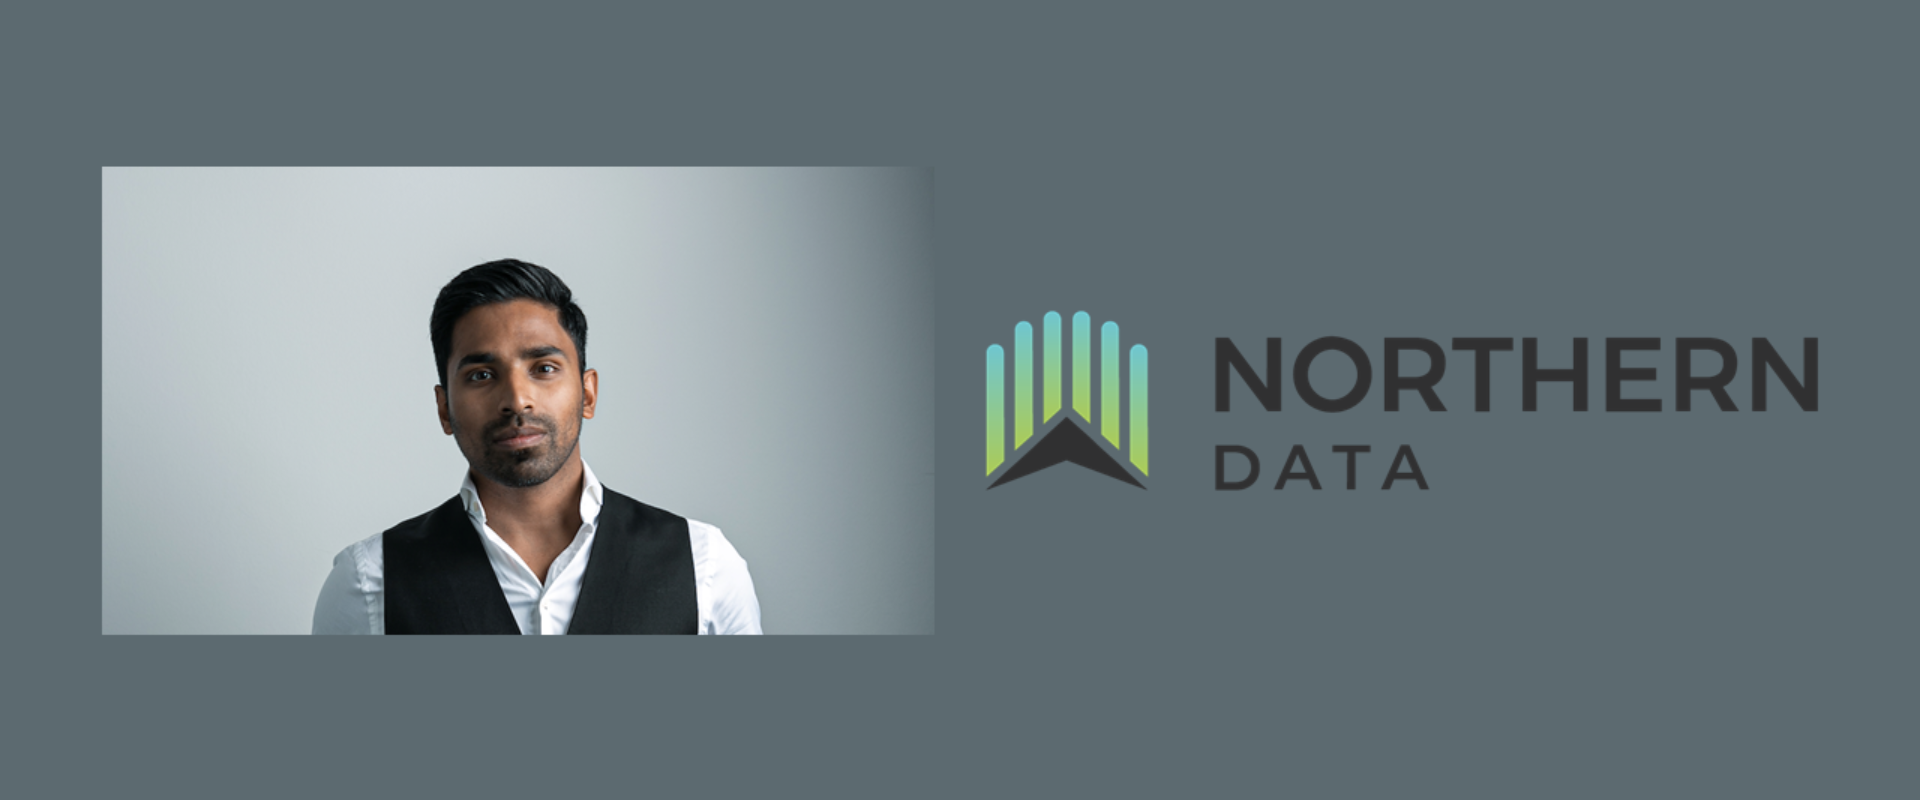 northern data ceo interview